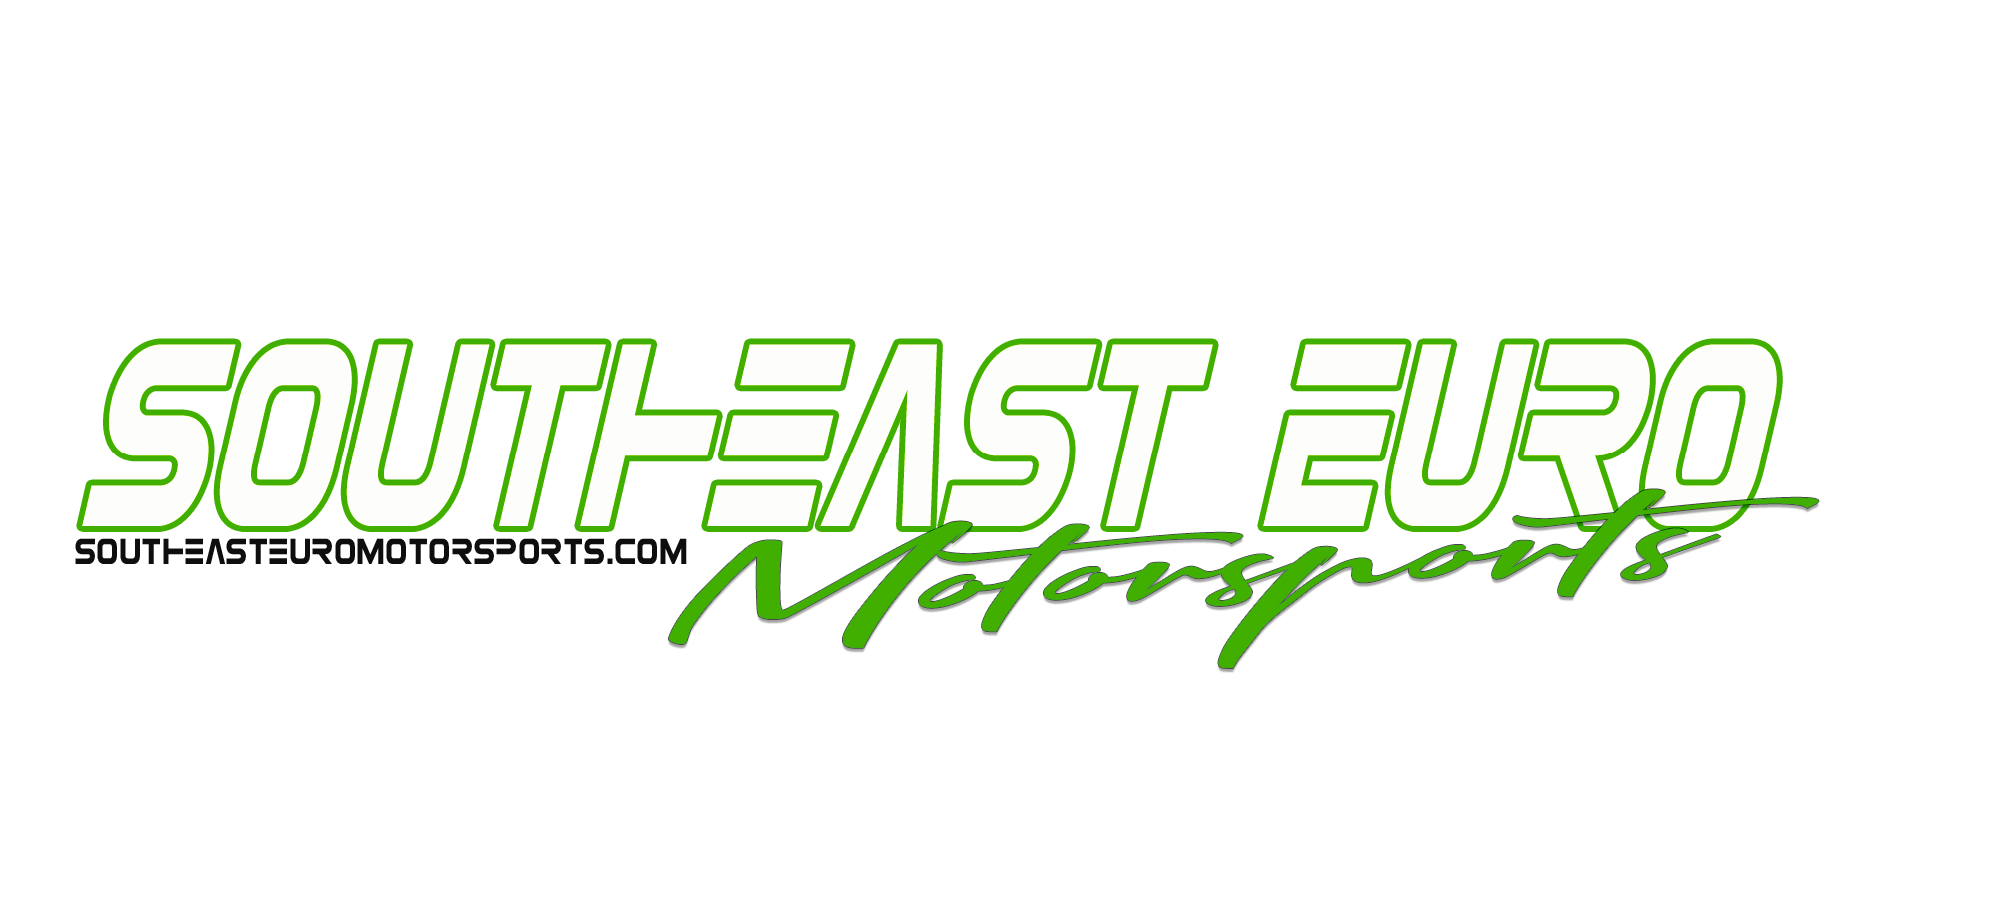 South East Euro Motorsports